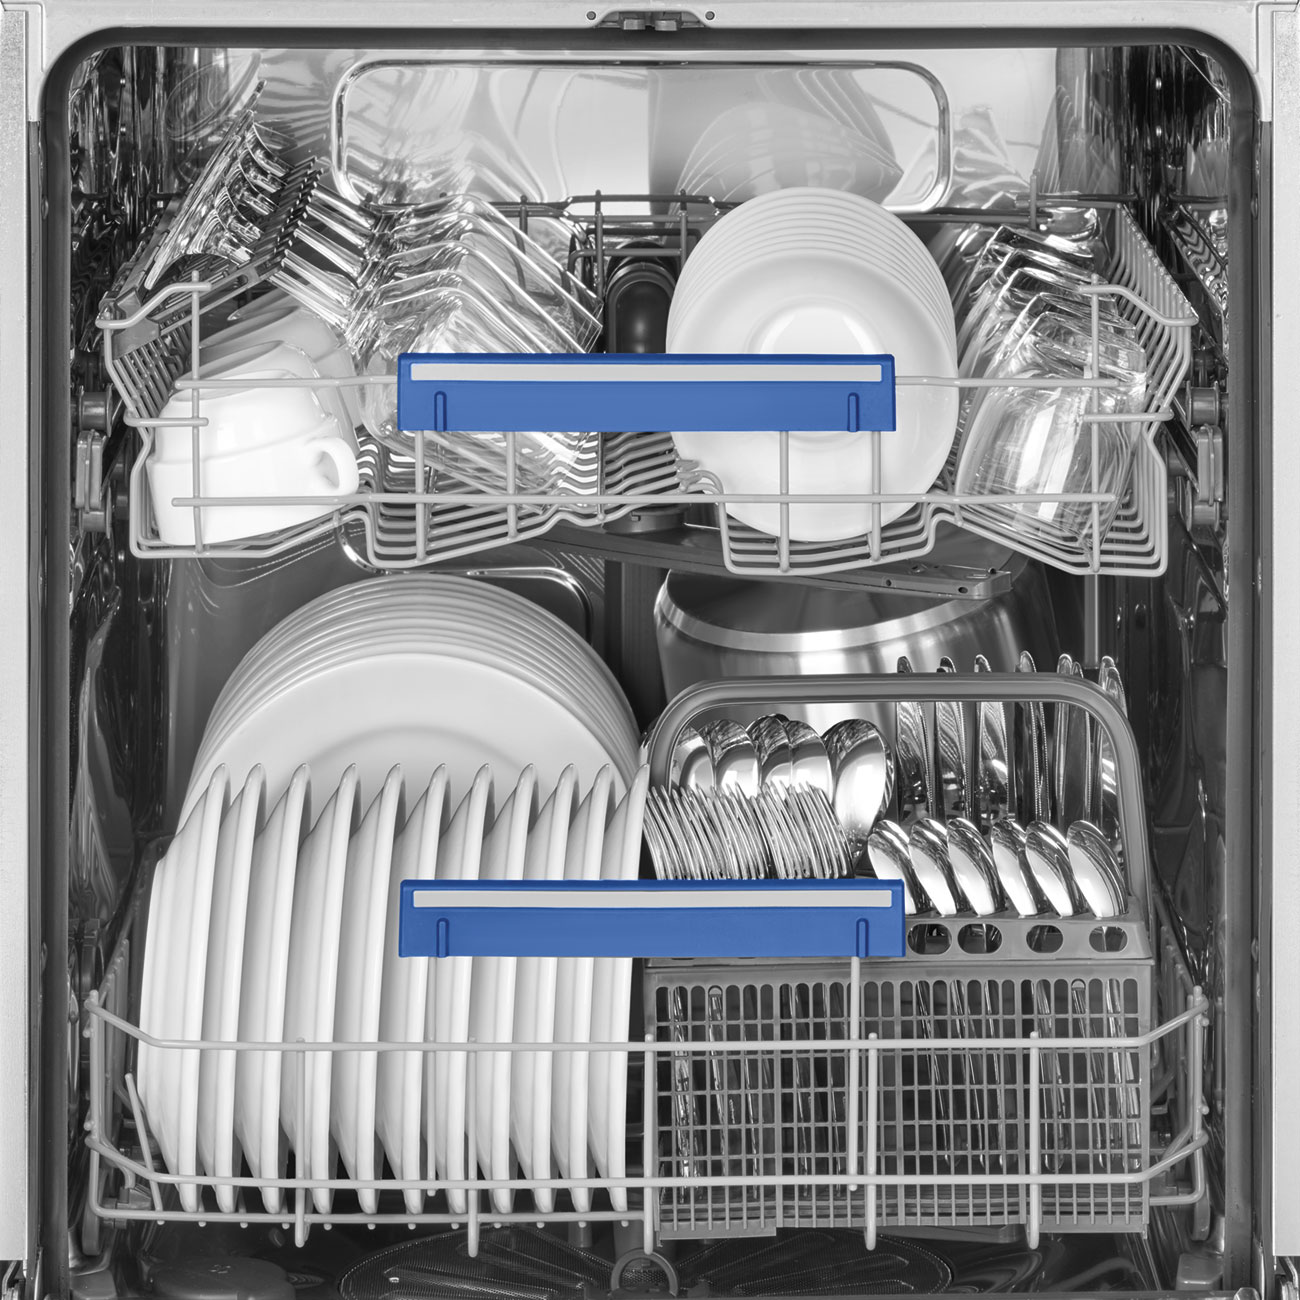  dishwasher 60 cm Smeg_8